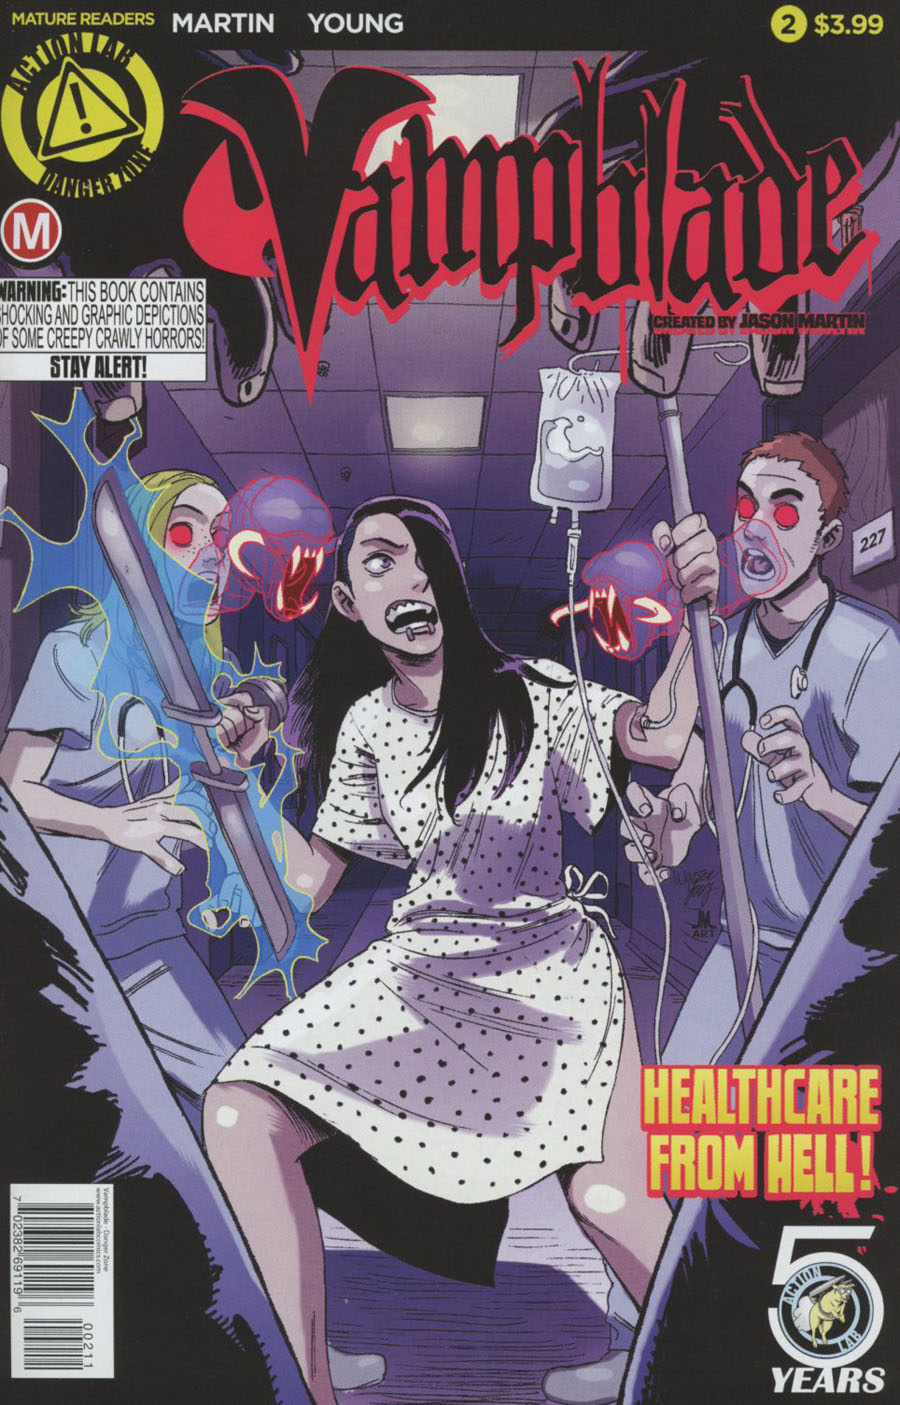 Vampblade #2 Cover A Regular Winston Young Cover